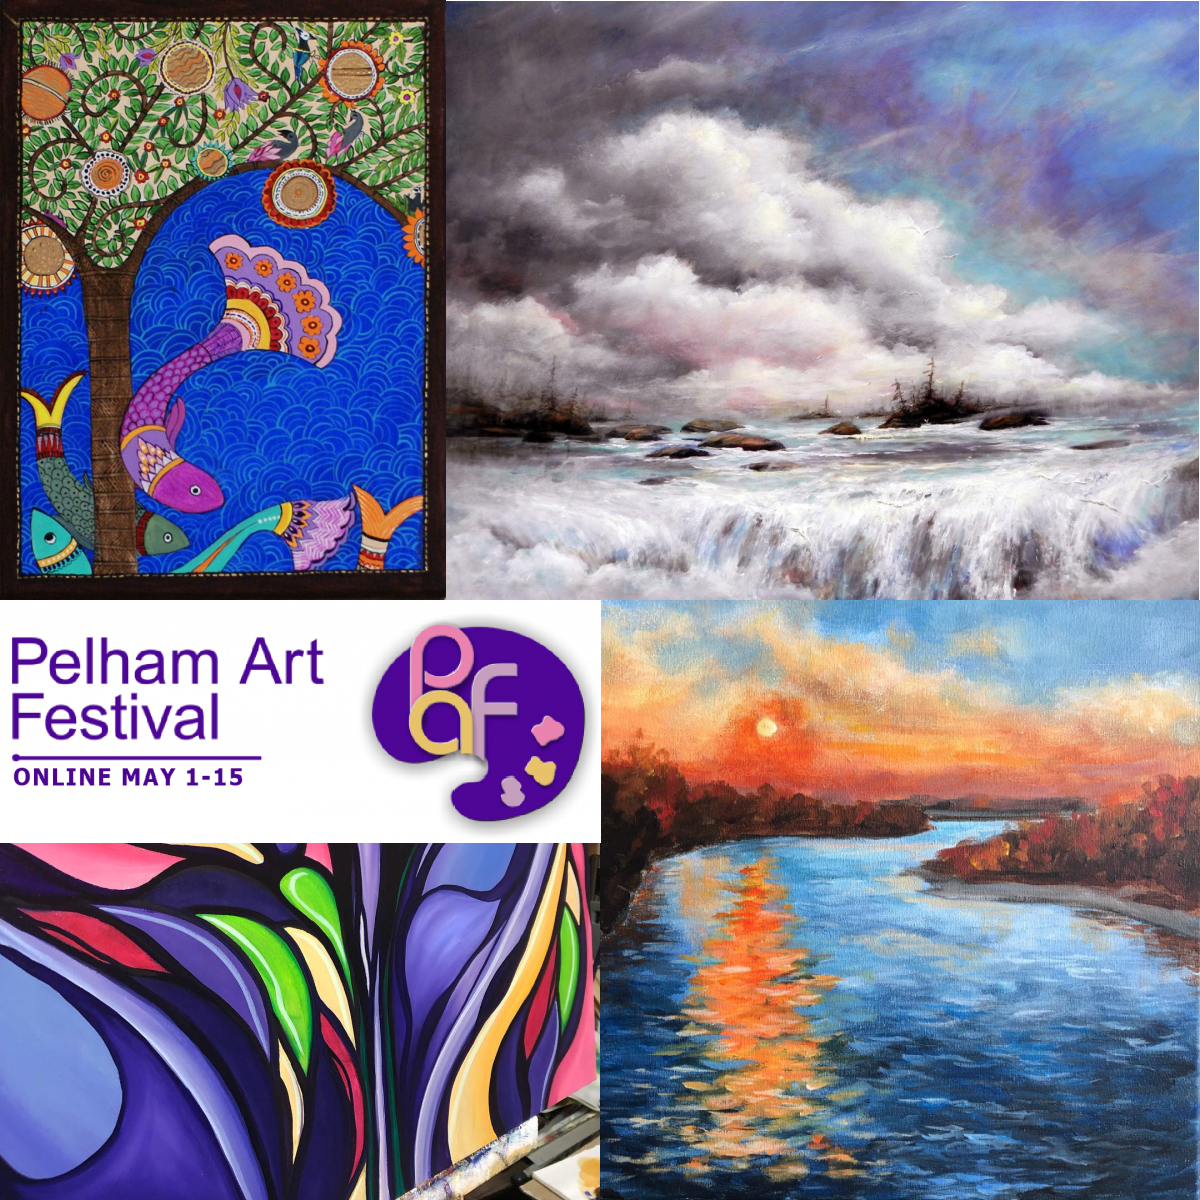 Coming Soon! Pelham Art Festival ONLINE Show & Sale May 1-15, 2021